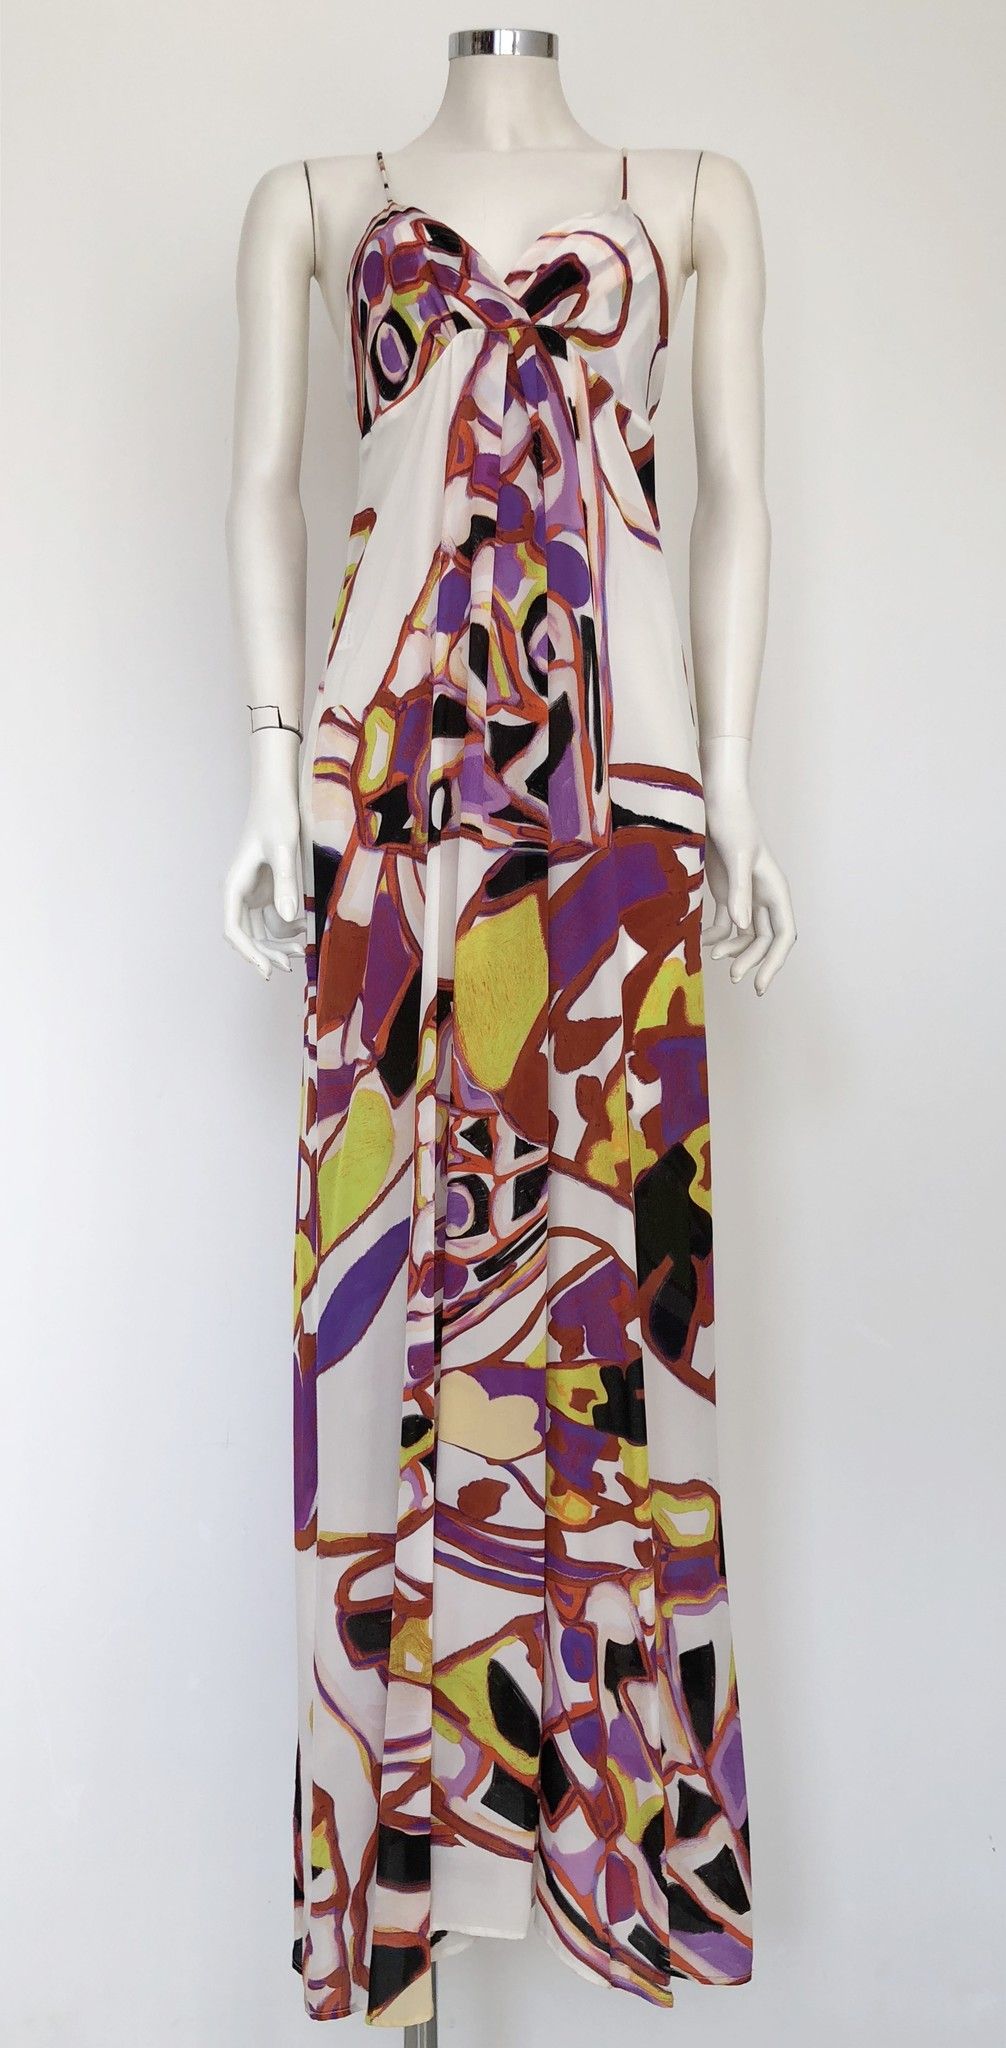 Adele Fado Long Dress in Floral Design Cod.79984